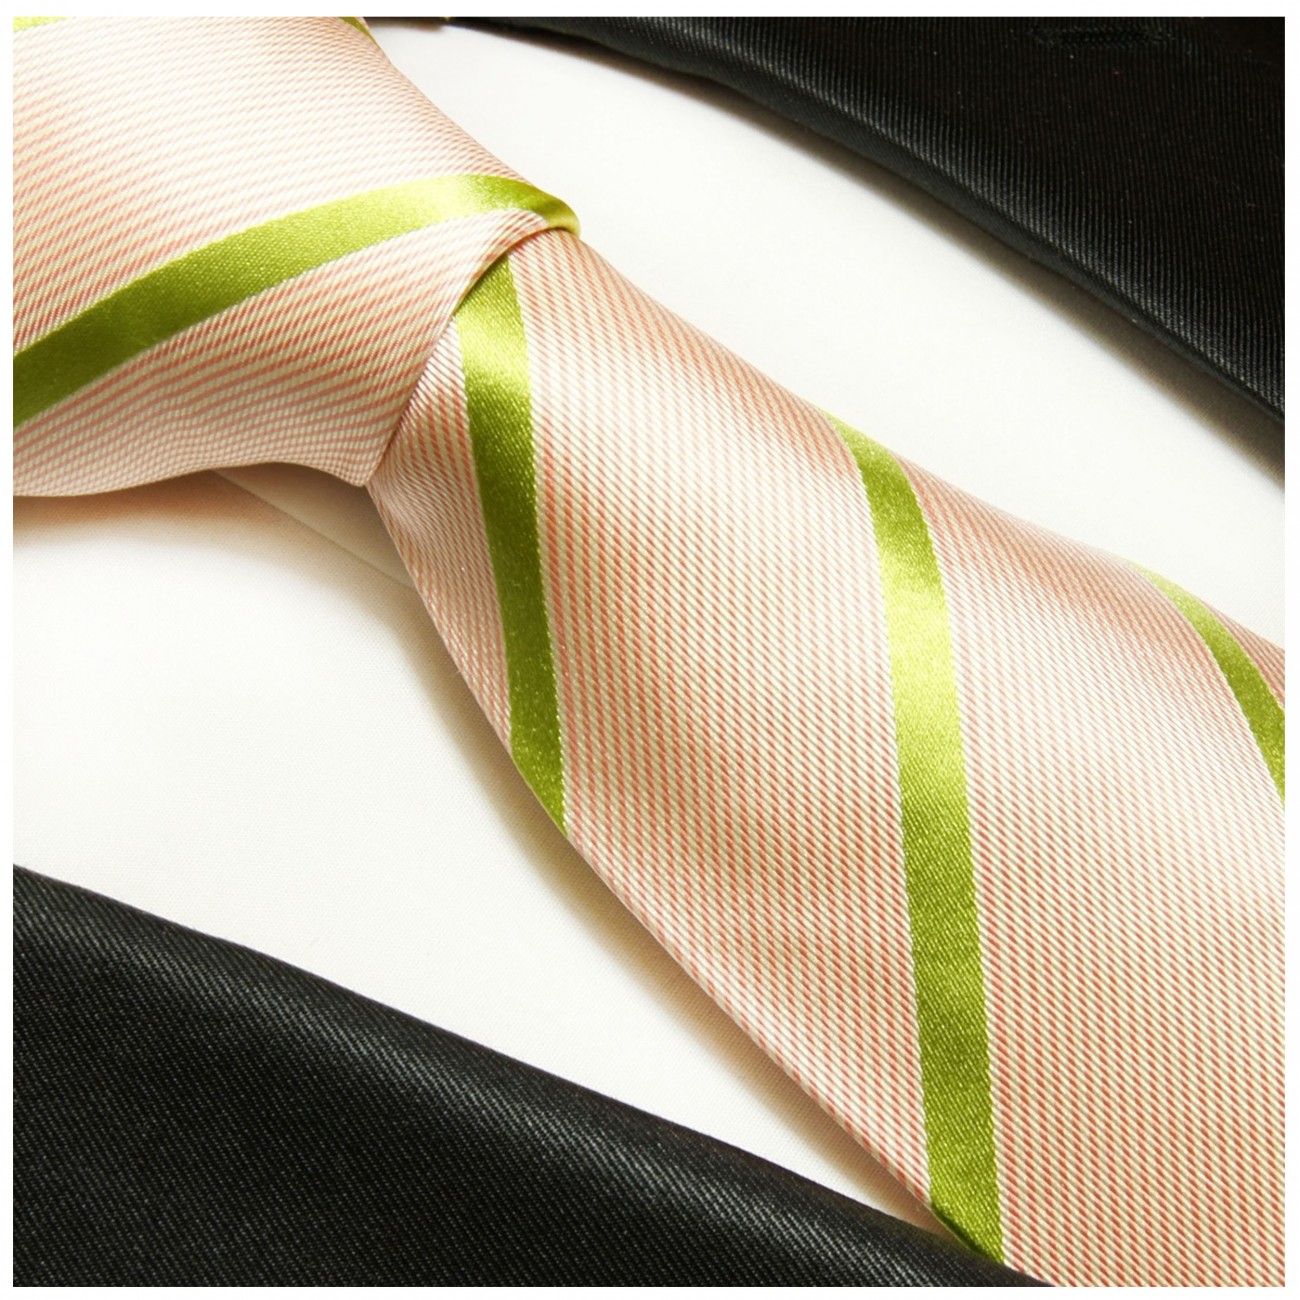 Extra lange Krawatte 165cm - Krawatte lachs grün gestreift